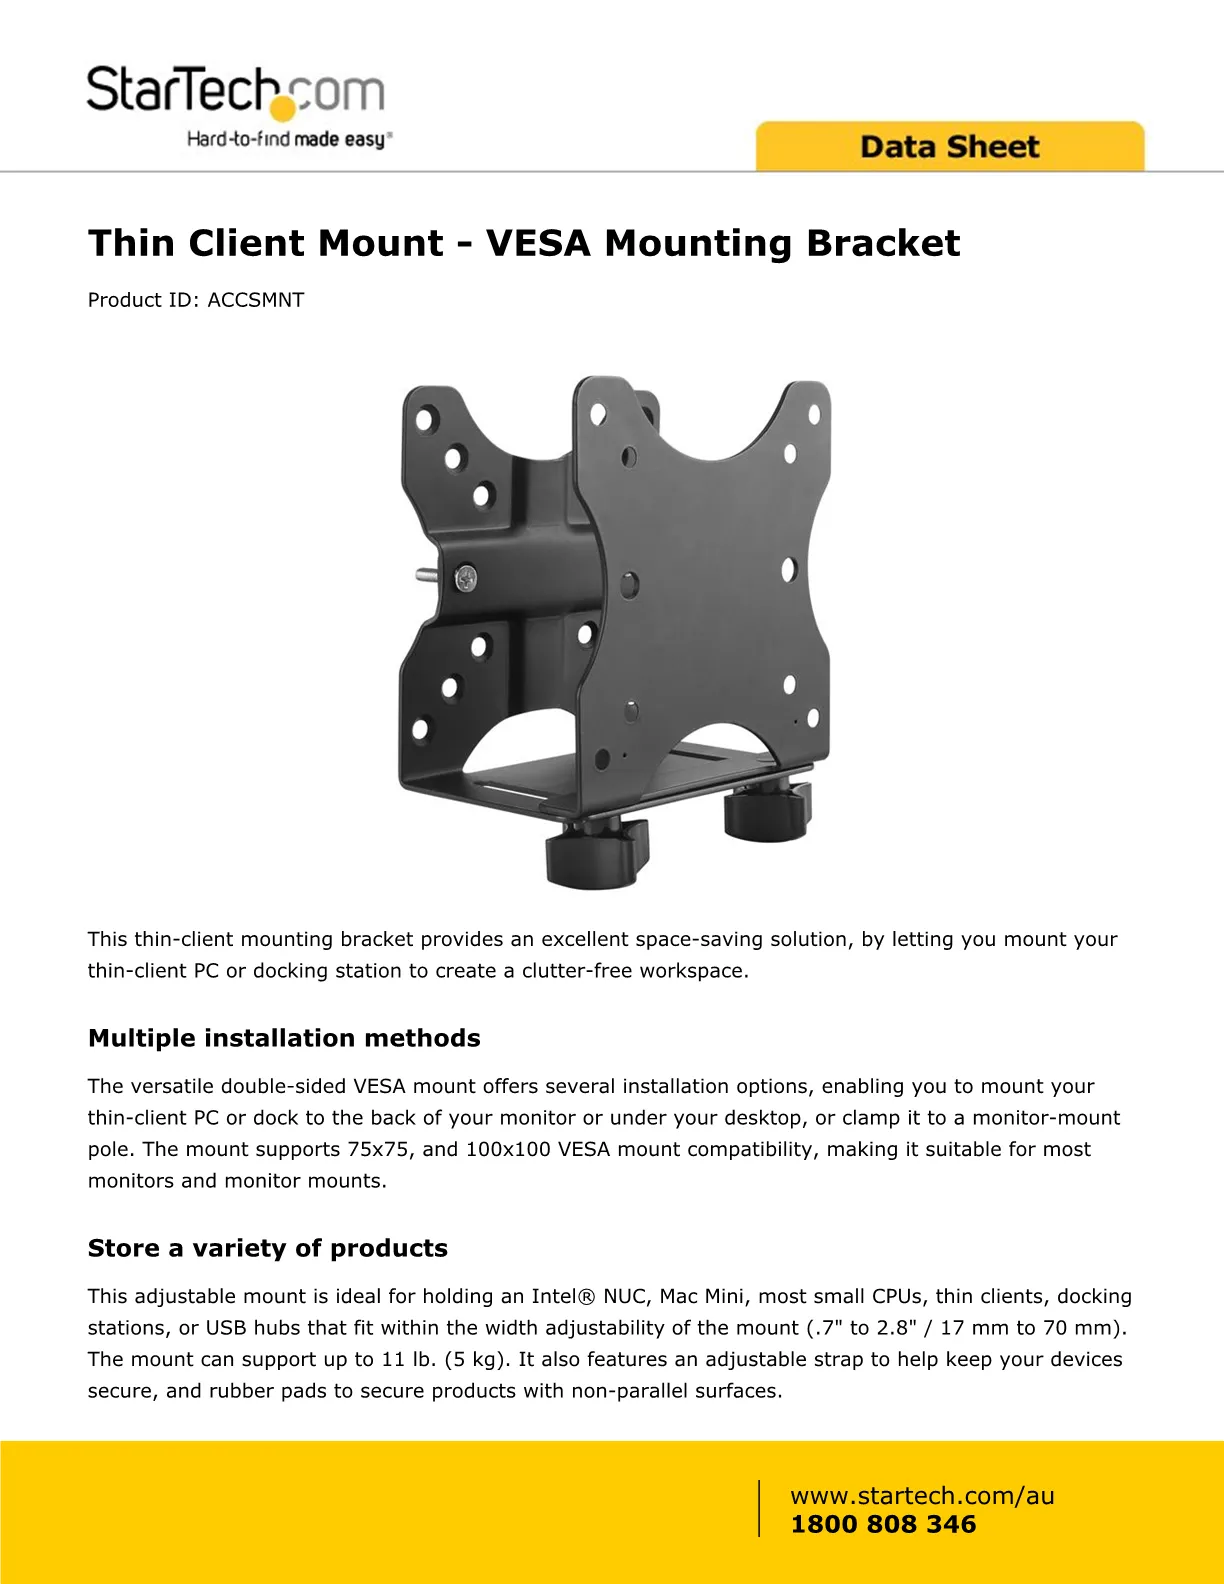 STARTECH THIN CLIENT MOUNT-VESA MOUNTING BRACKET-M - ACCSMNT